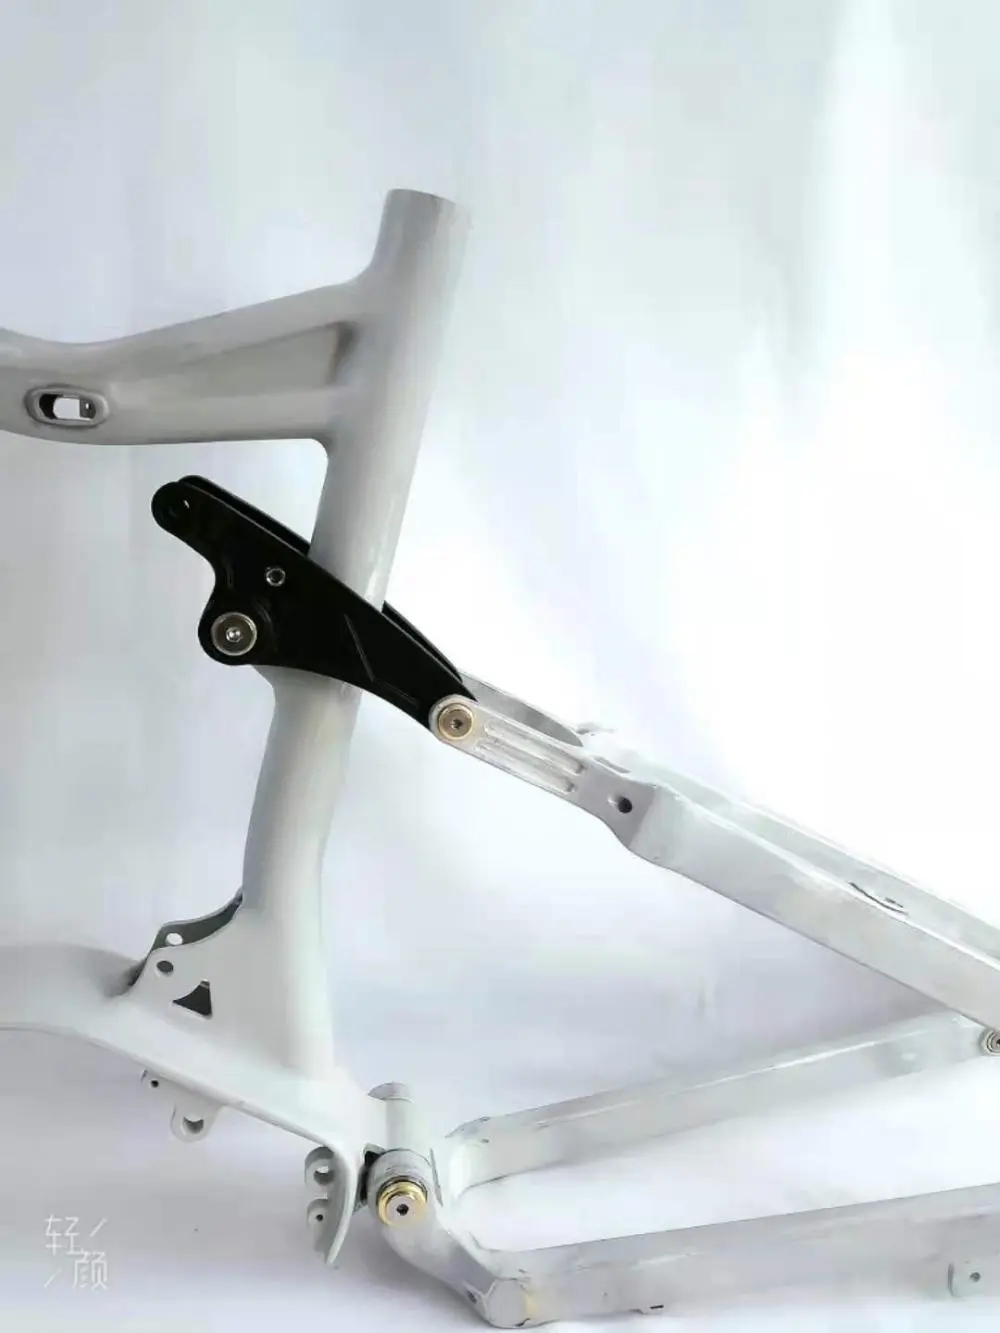 19 inch e-bike bafang ultra 1000w m620 frame